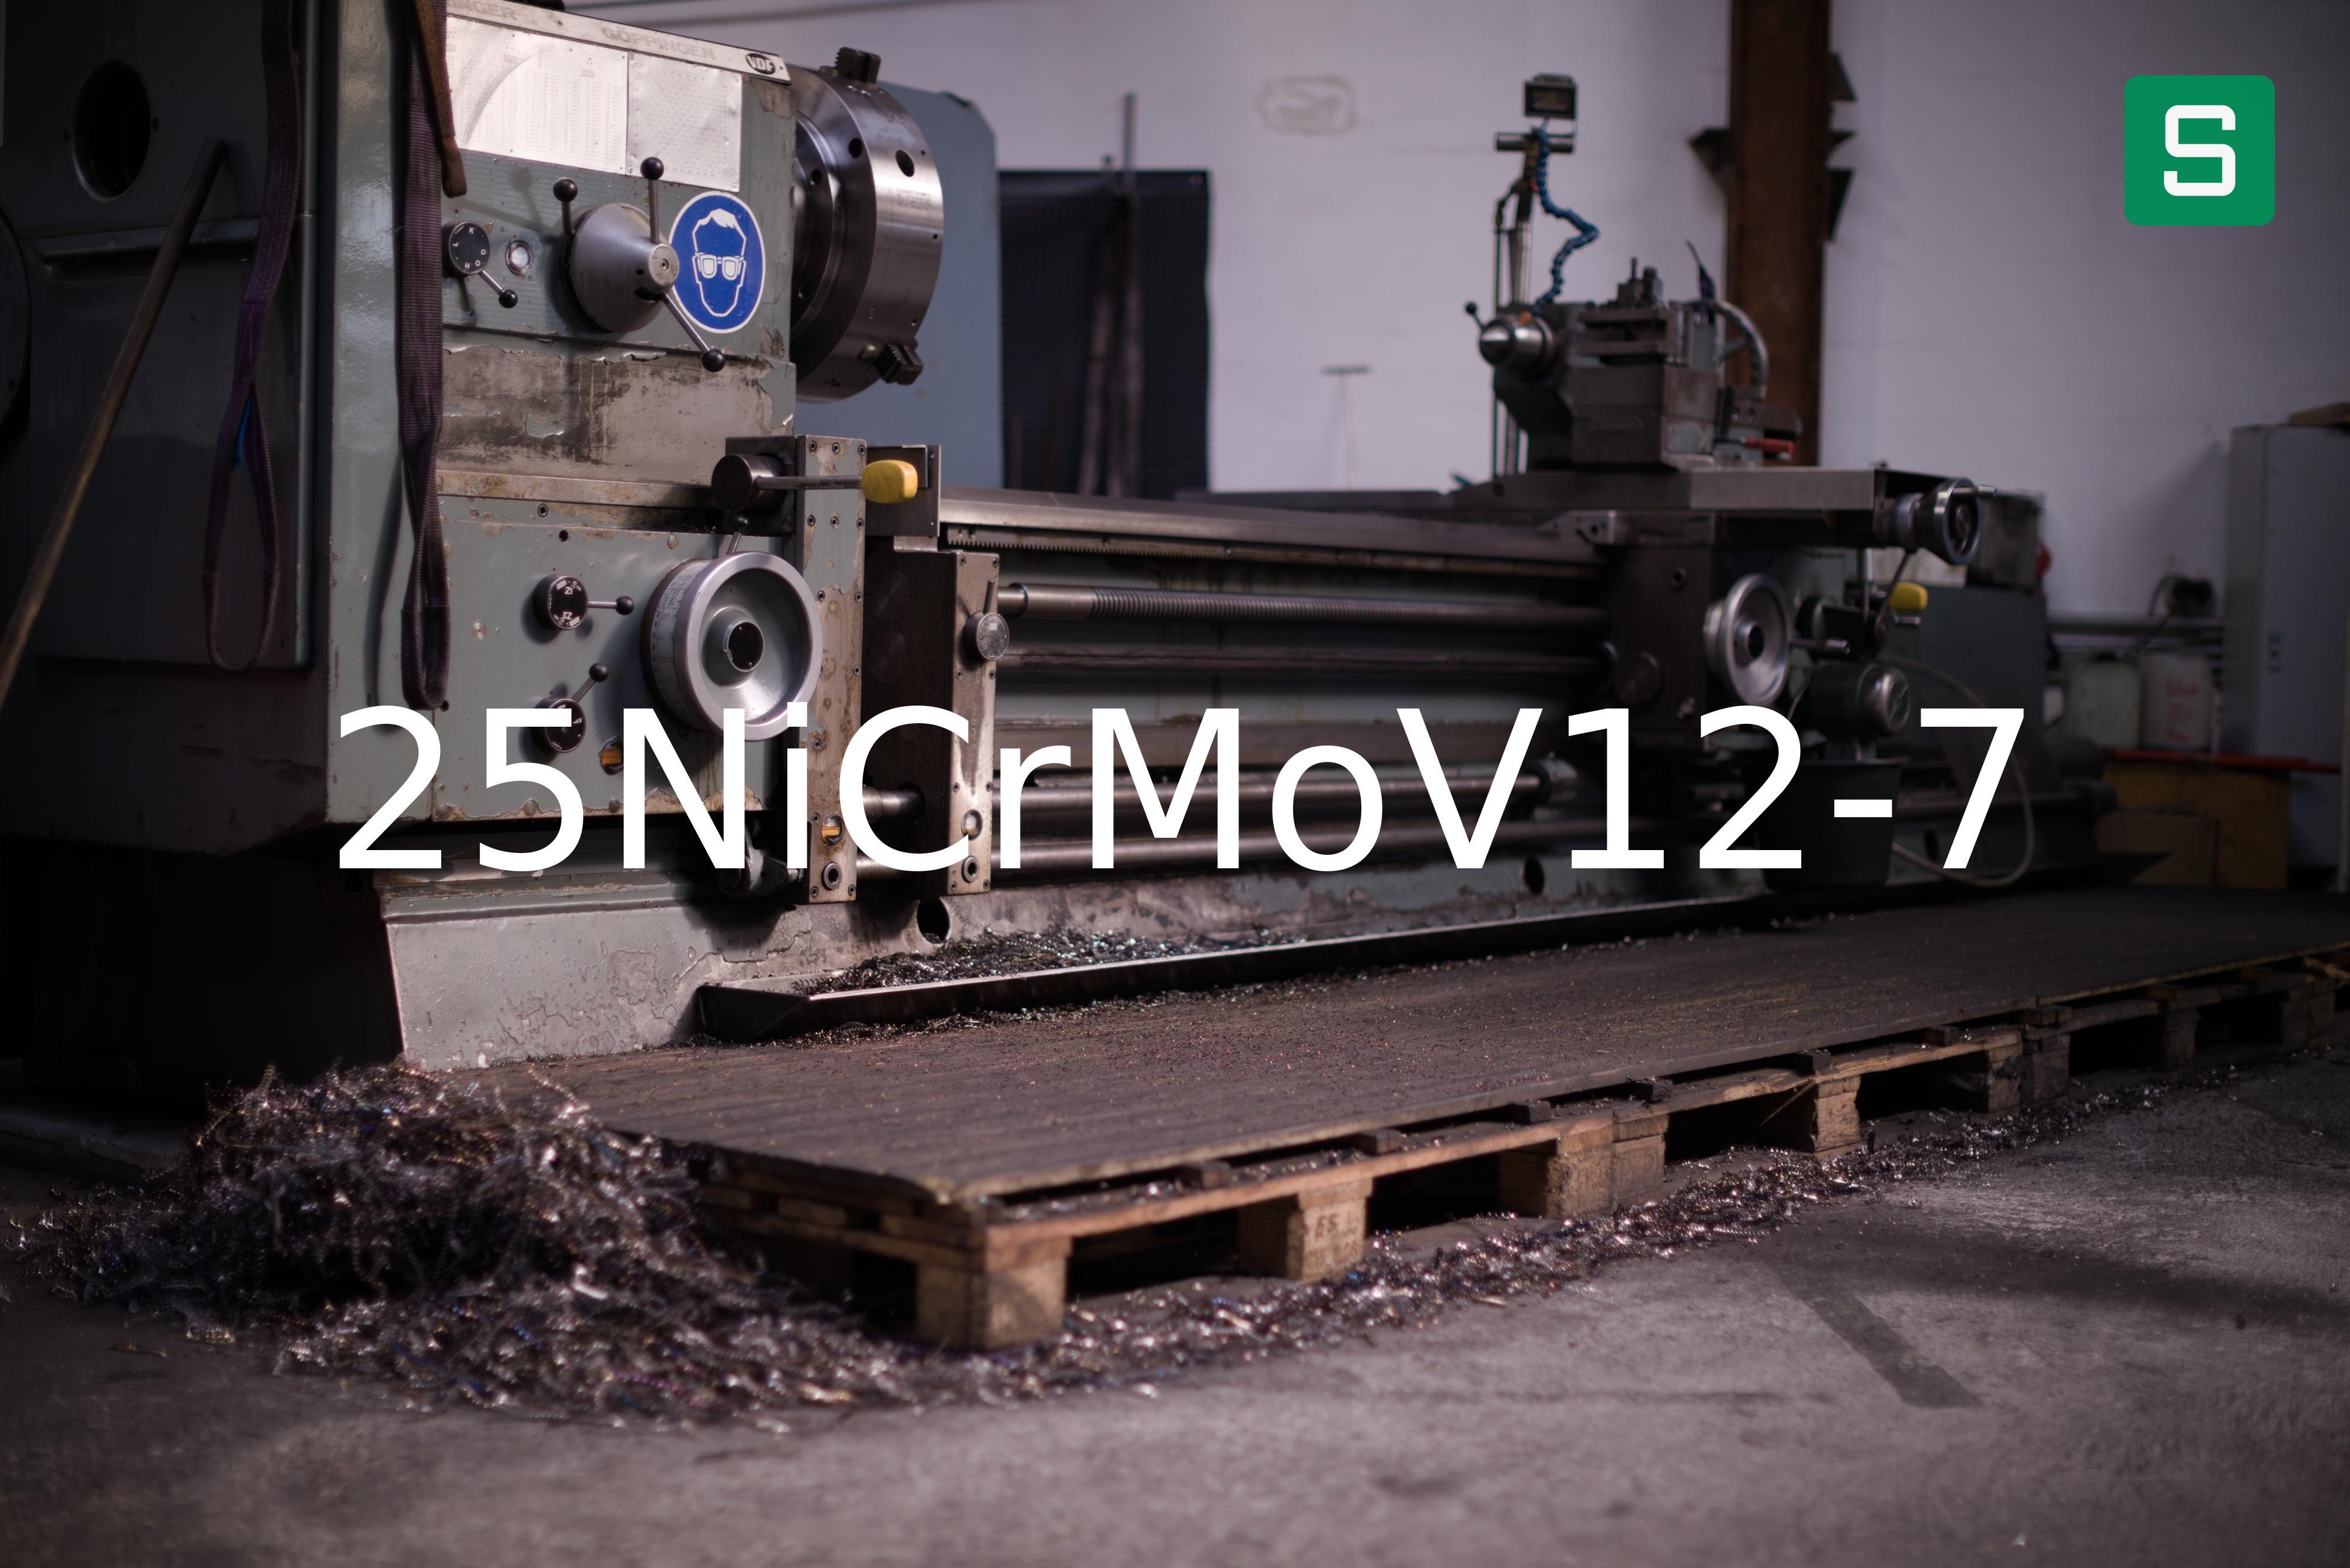 Steel Material: 25NiCrMoV12-7